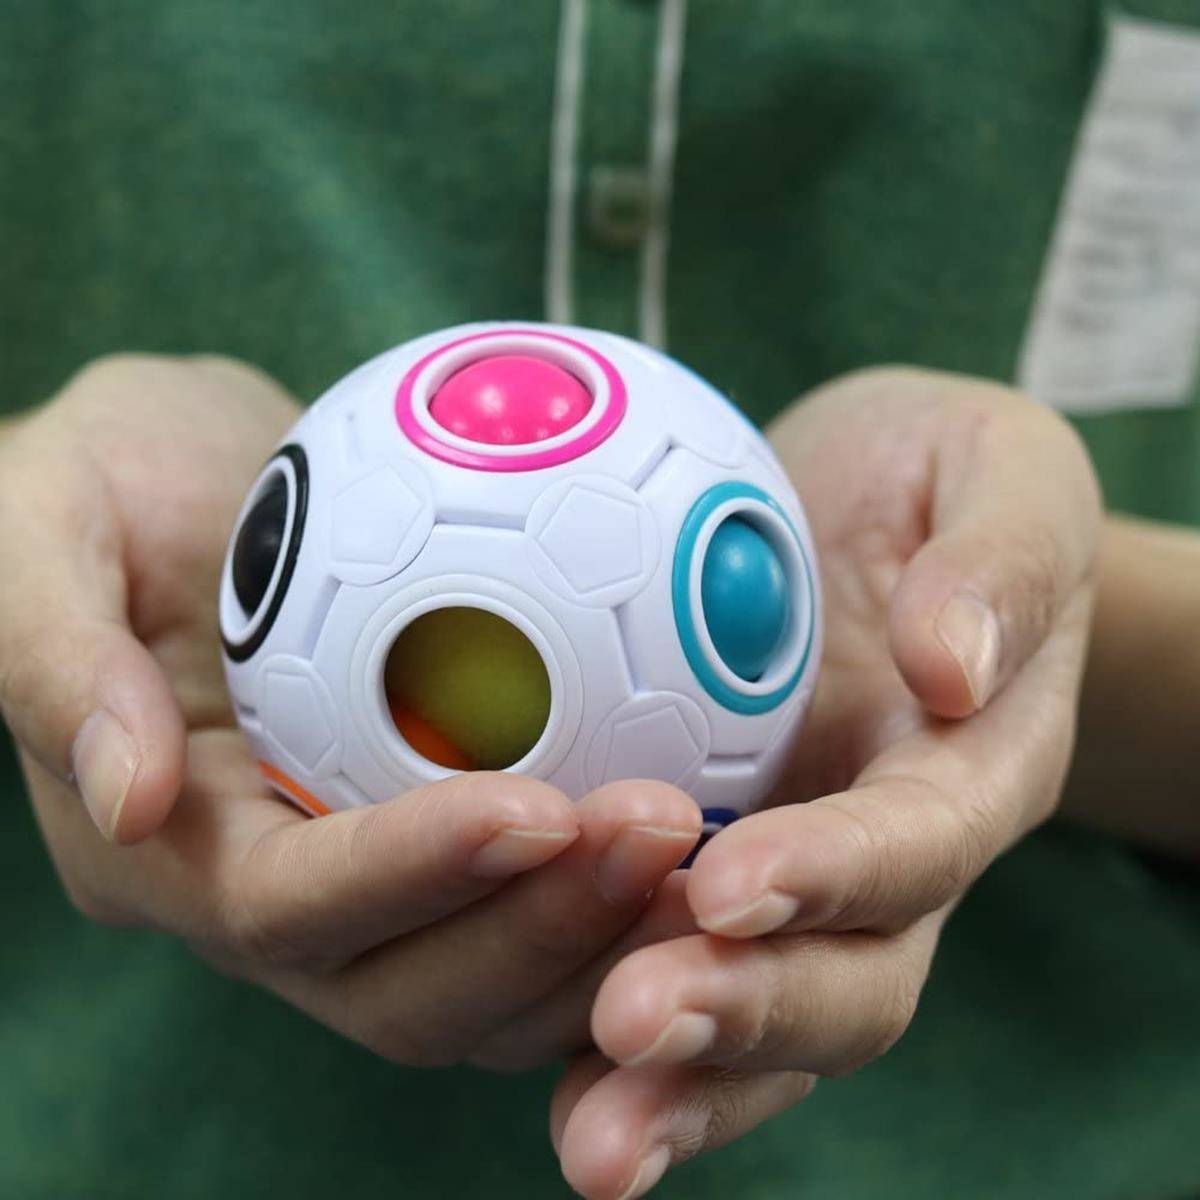 Piłka antystresowa sensoryczna Magic Cube